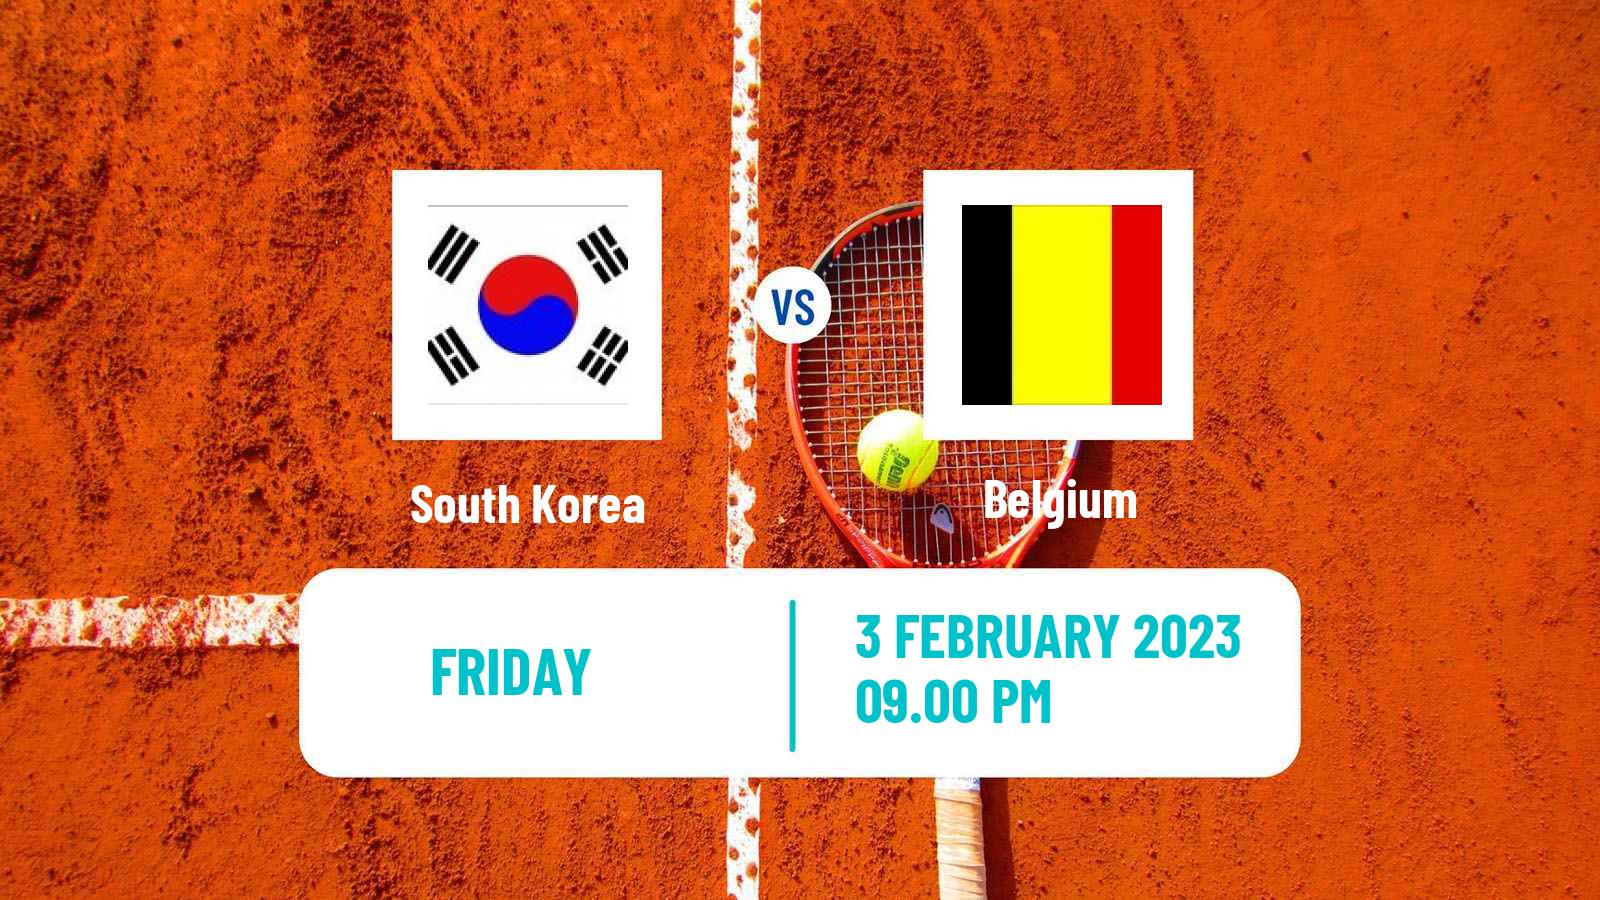 Tennis Davis Cup - World Group Teams South Korea - Belgium